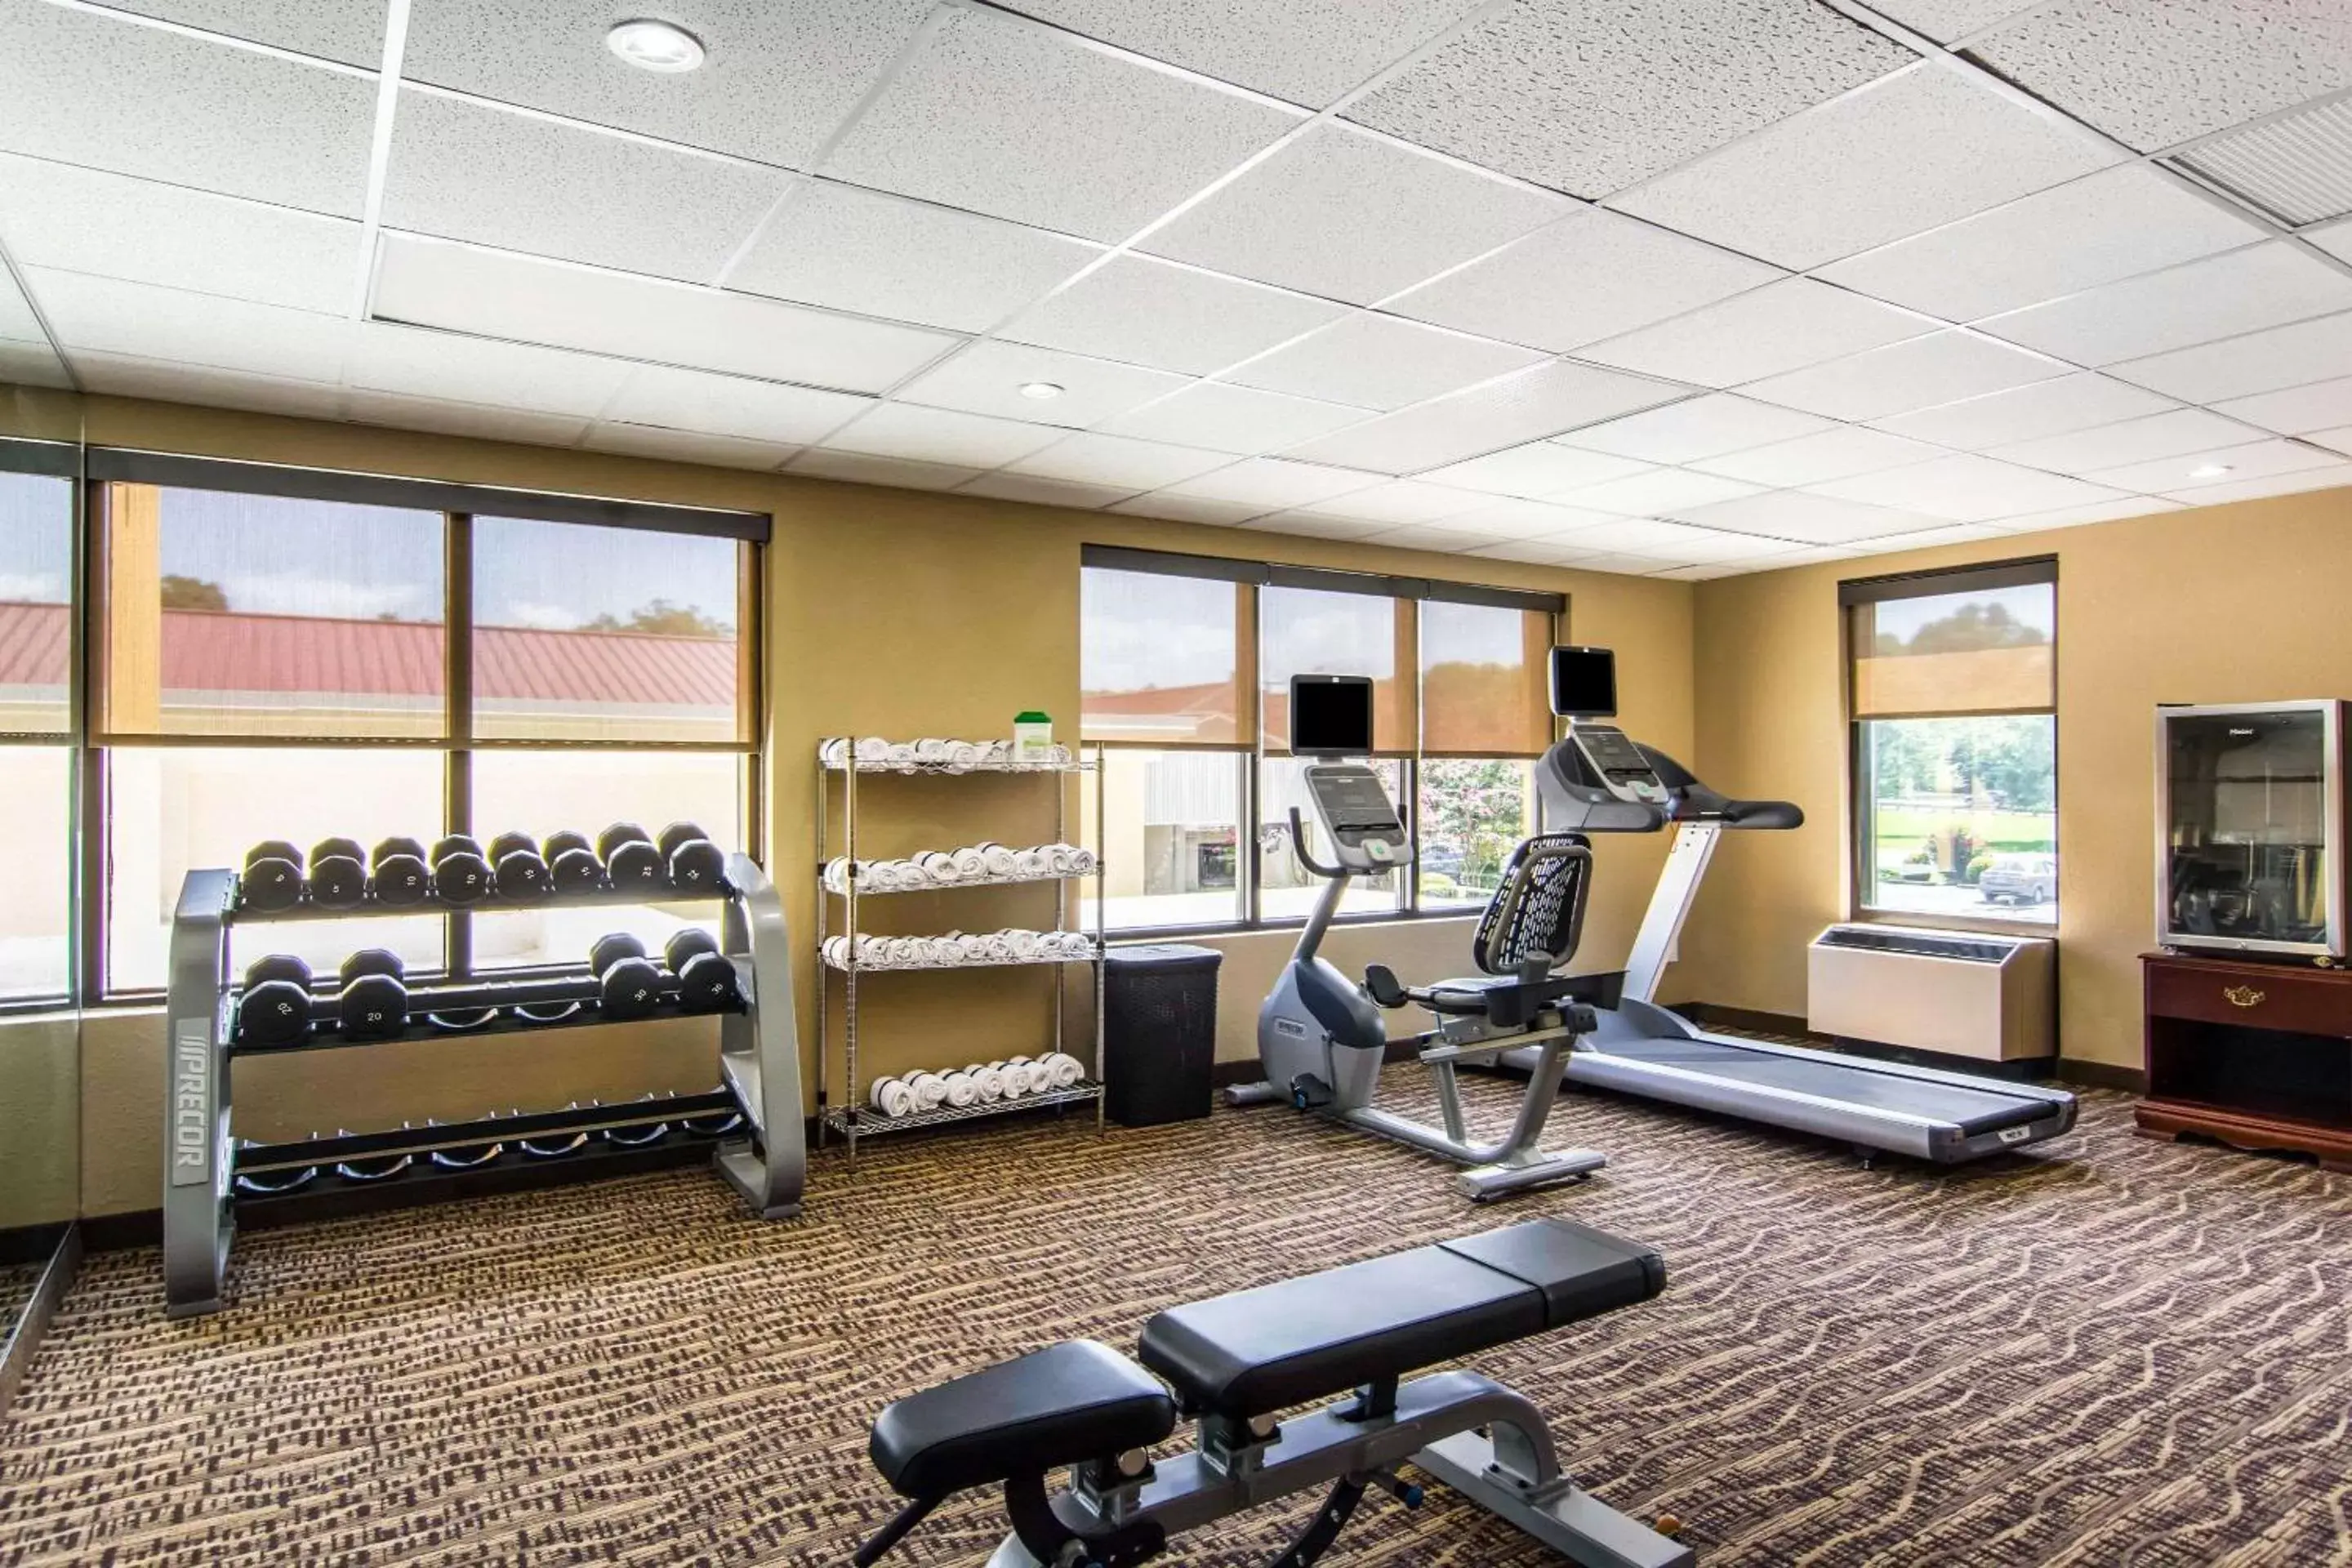 Fitness centre/facilities, Fitness Center/Facilities in Comfort Inn Newport News Williamsburg East